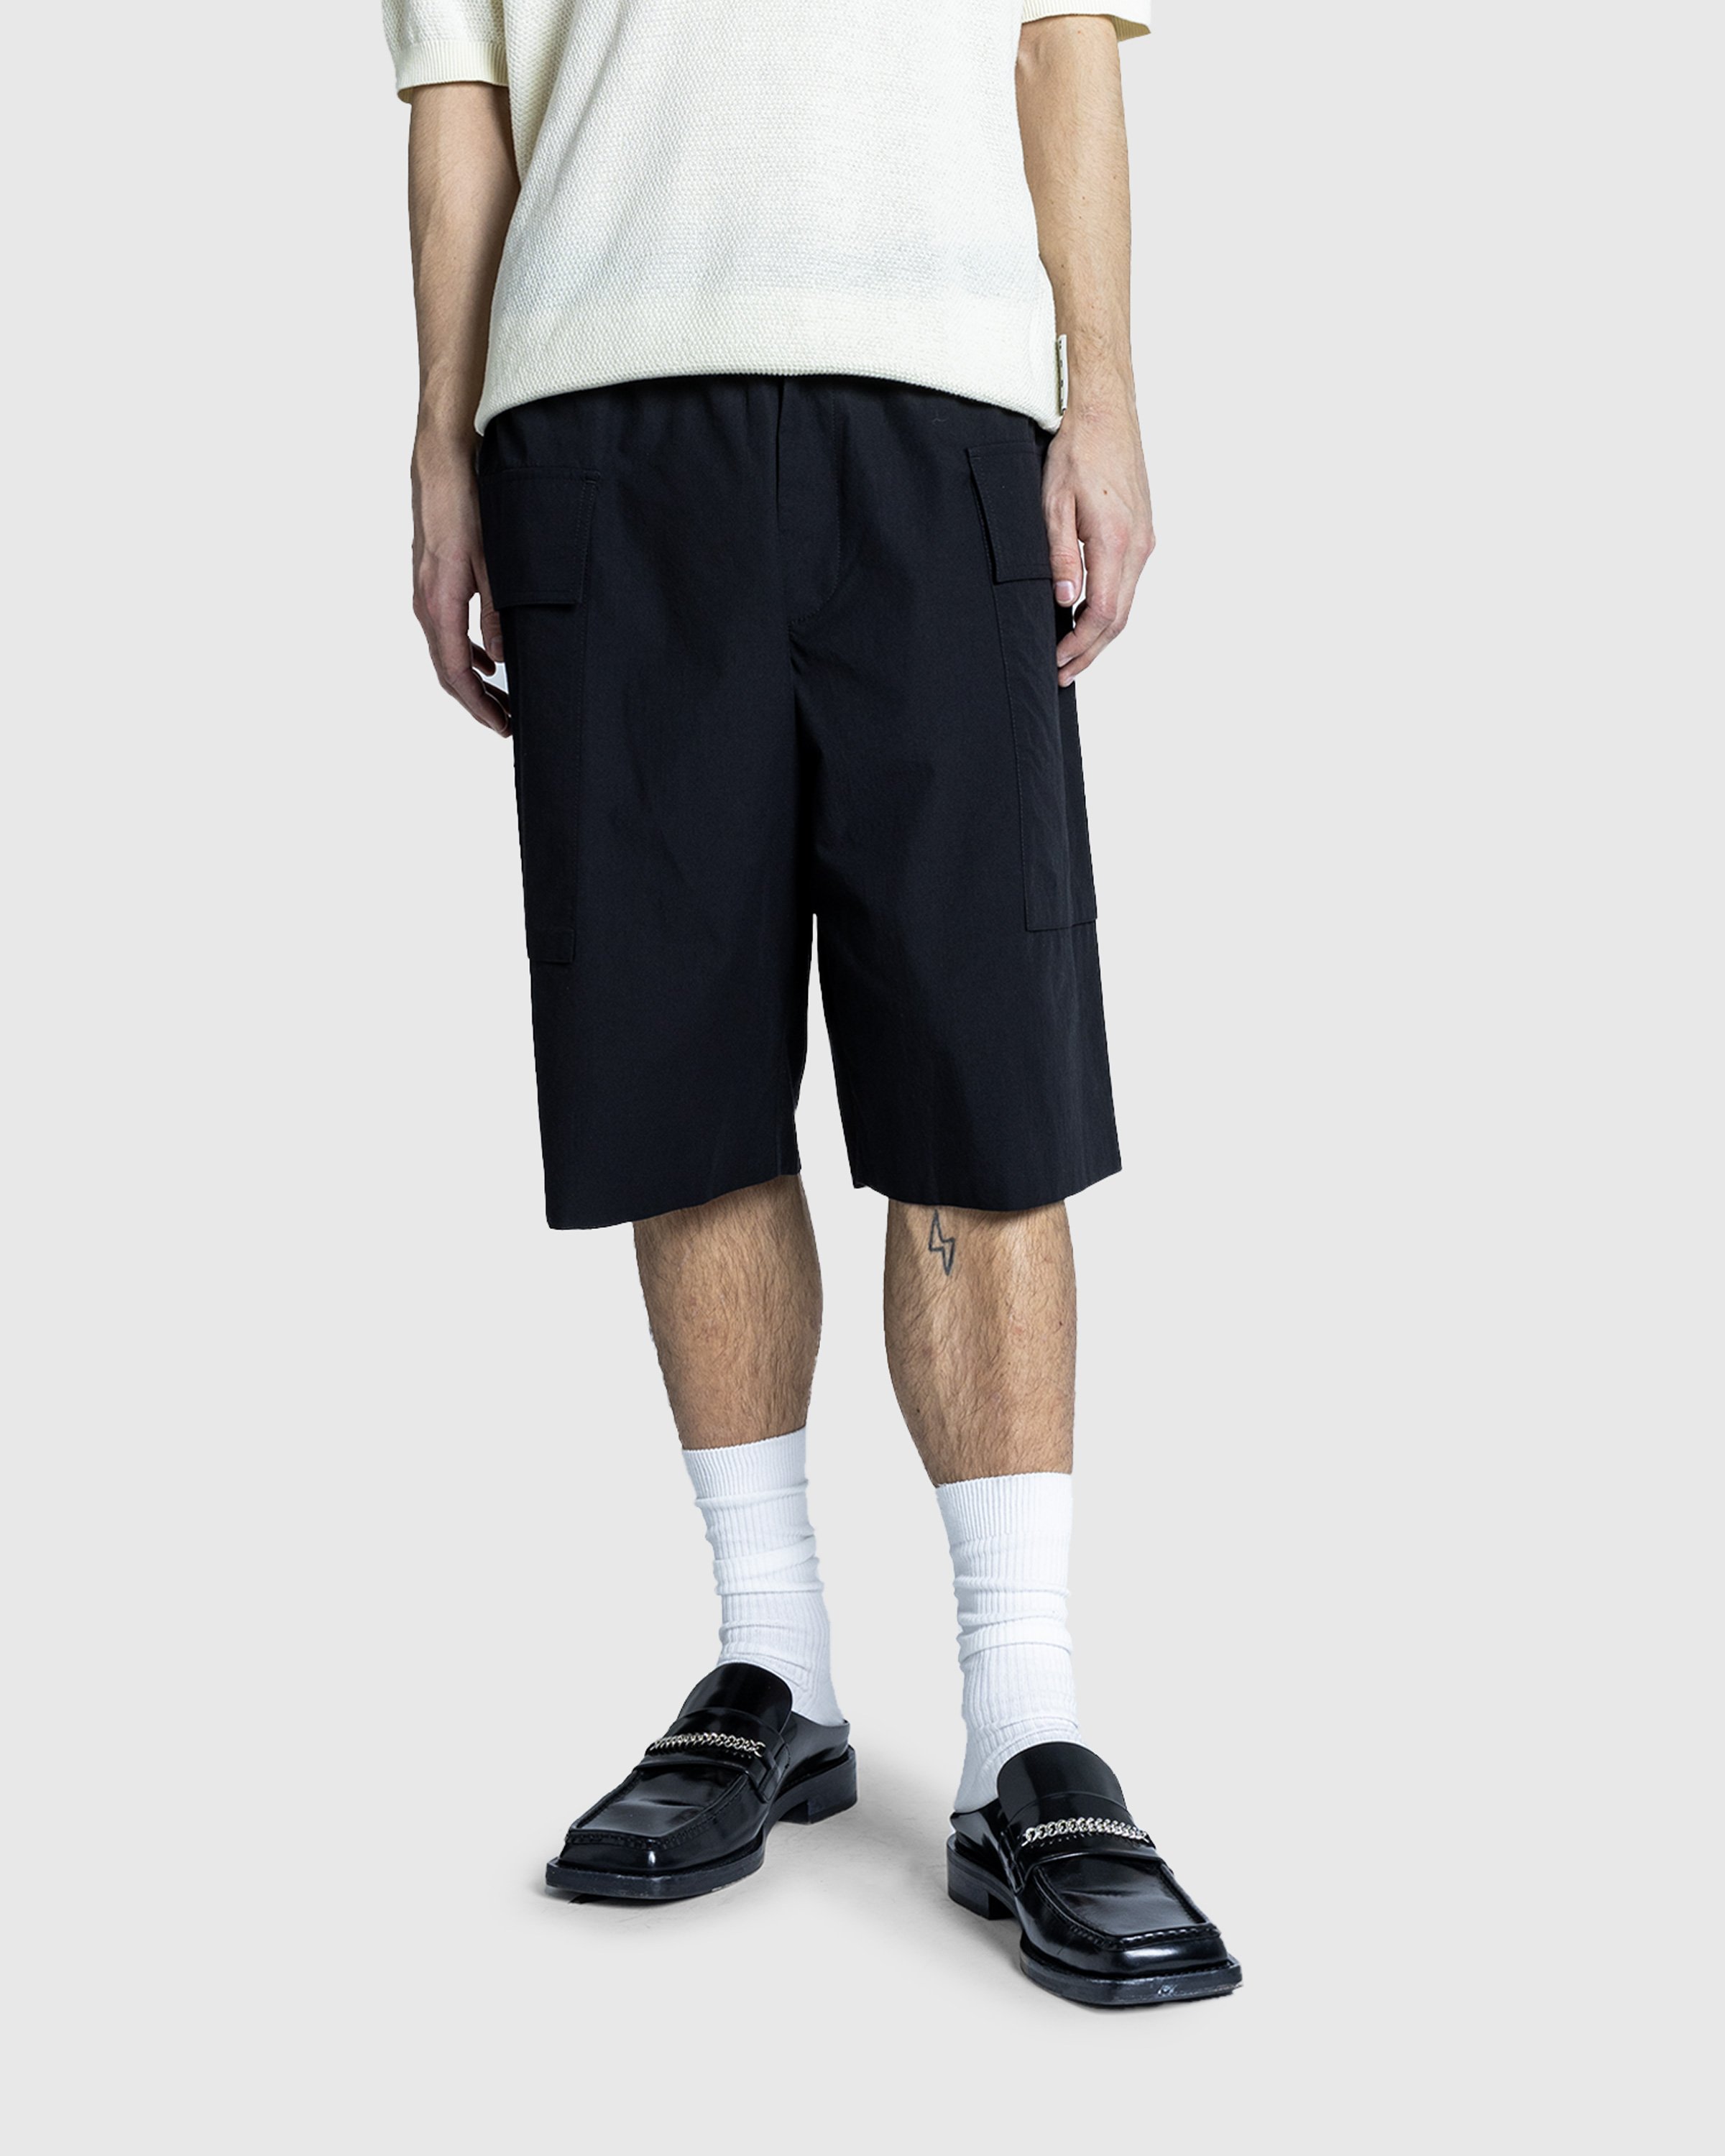 Jil Sander - Trouser 94 Short - Clothing - Black - Image 2